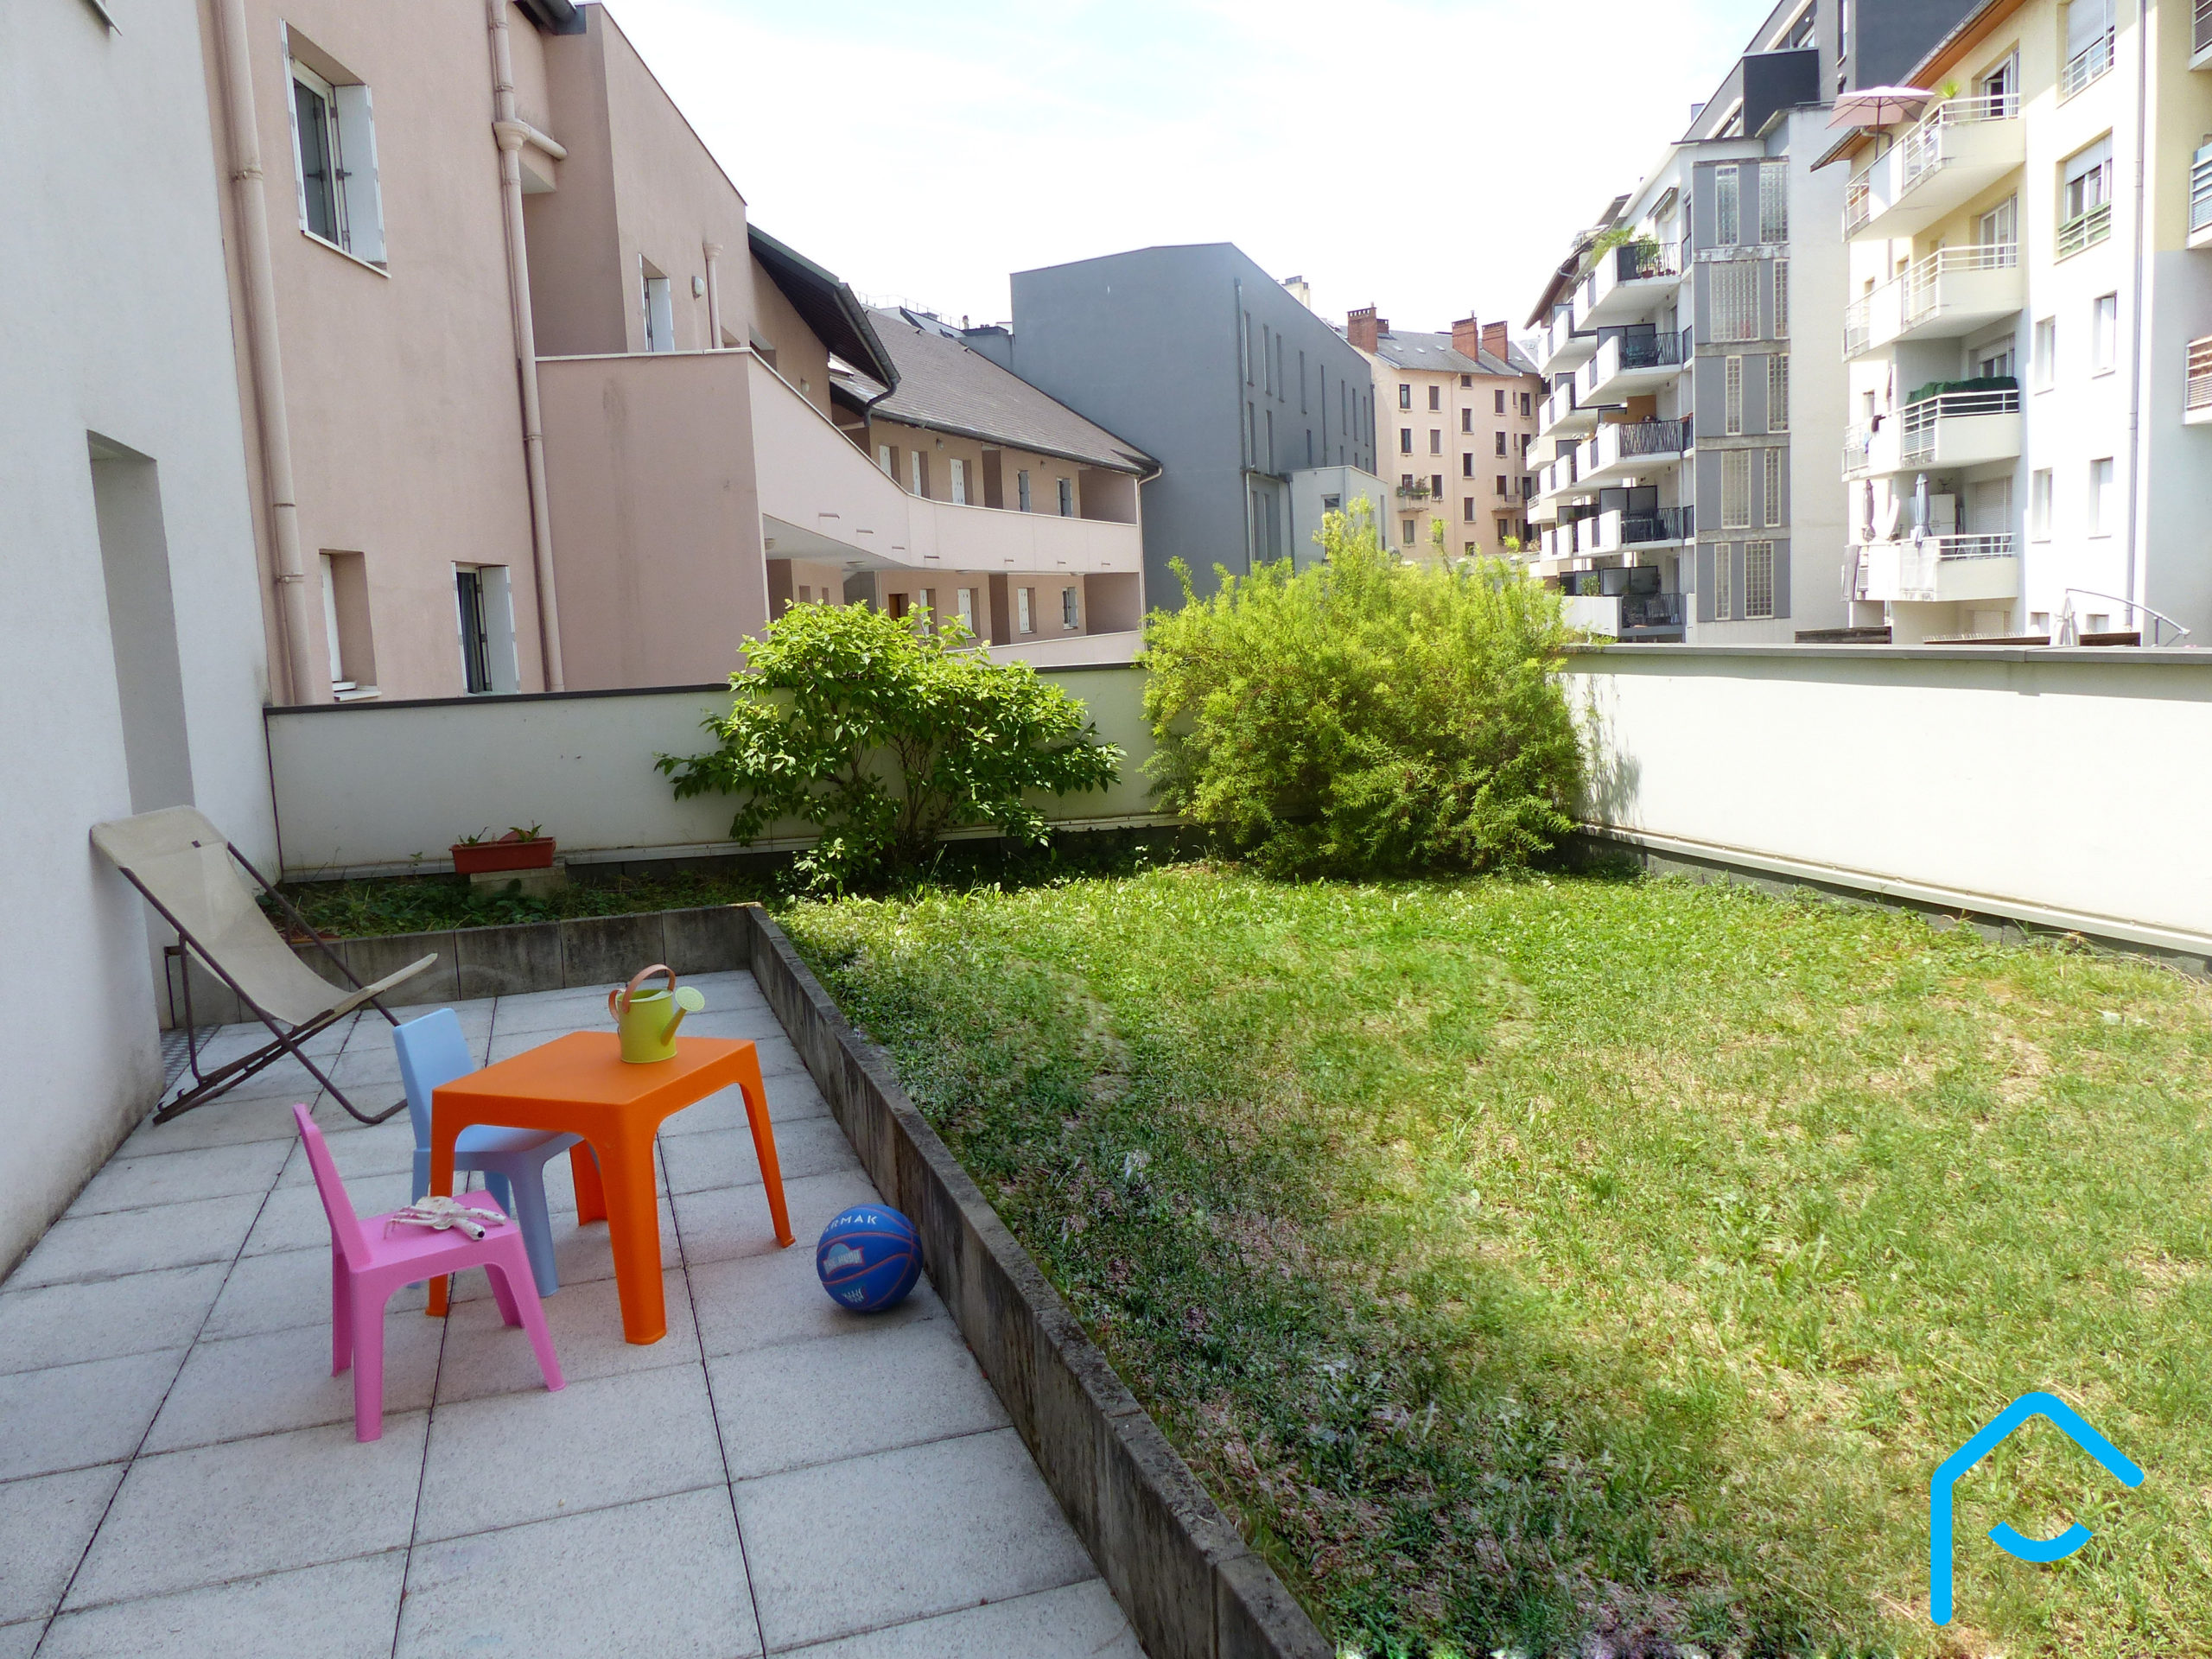 A vendre appartement type T4 Chambéry Savoie terrasse vue 12